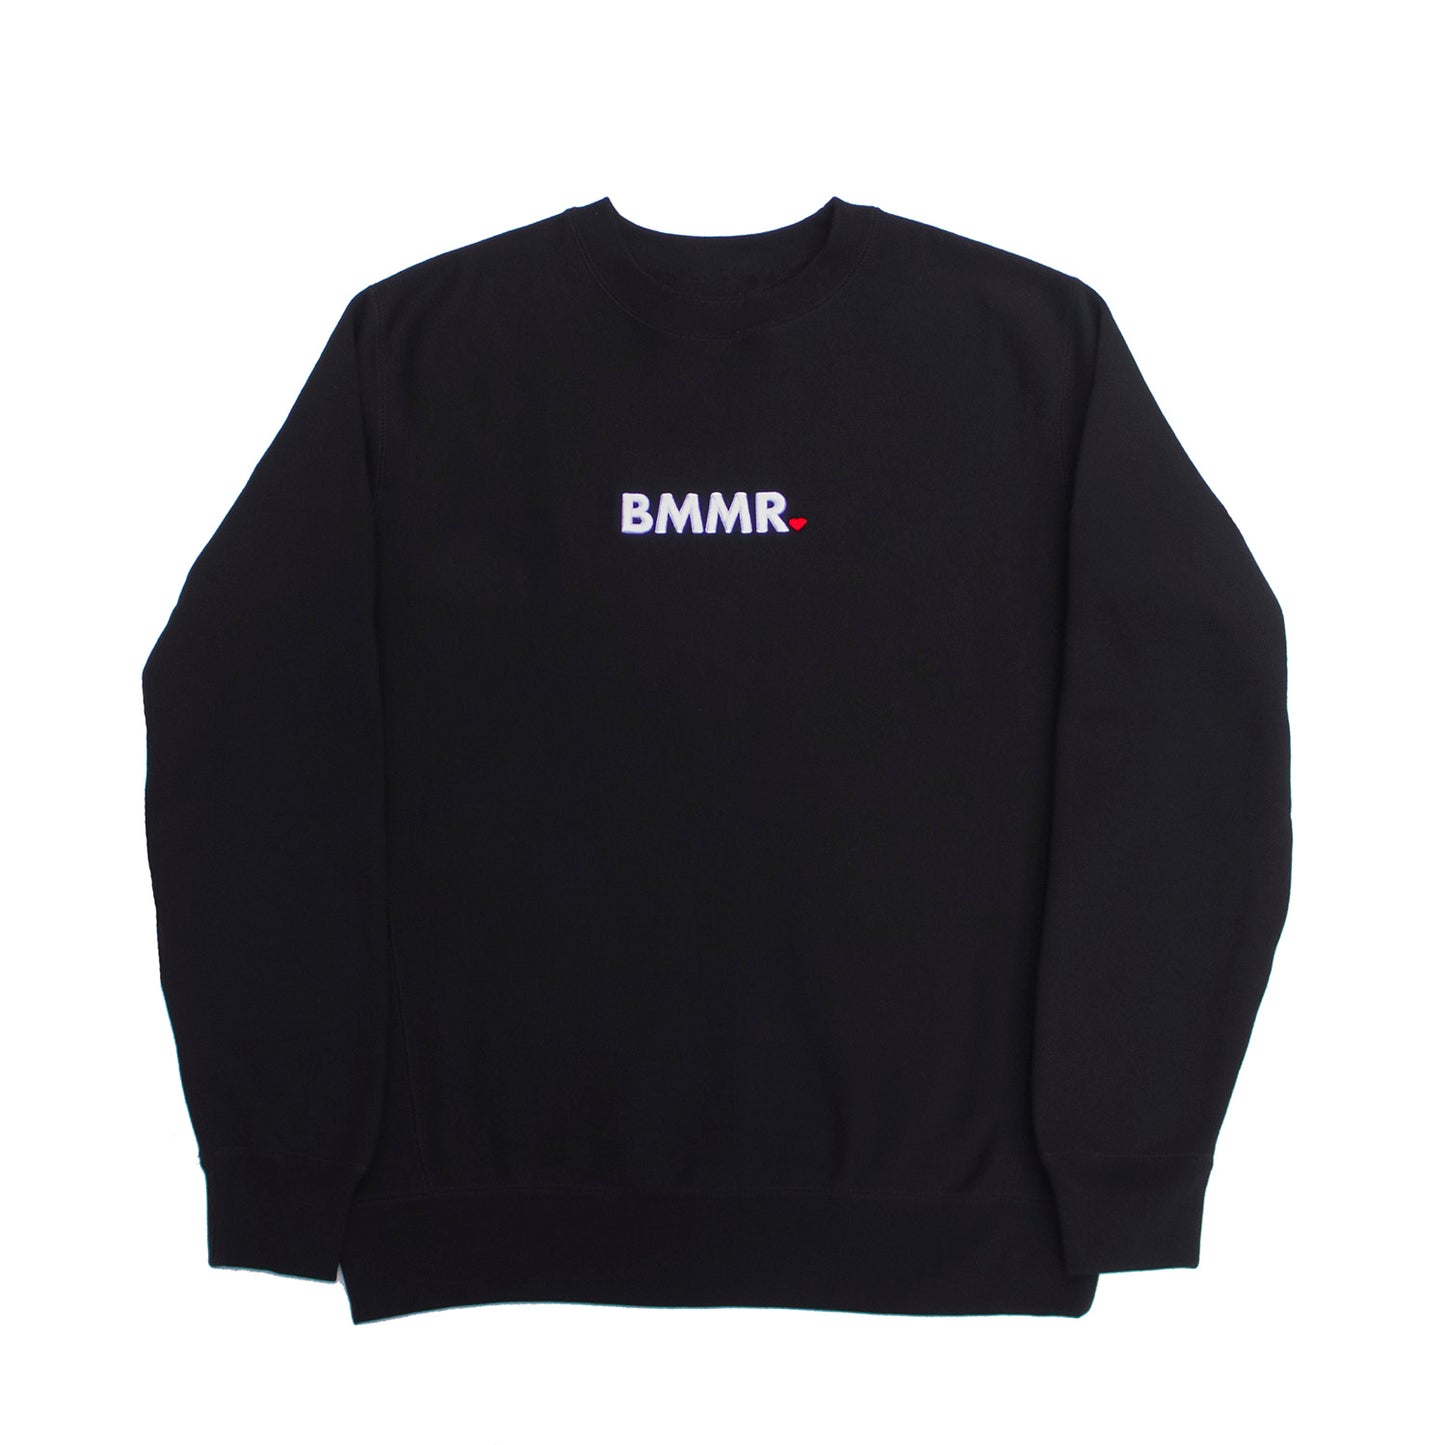 BMMR ❤️ (sweater) Unisex